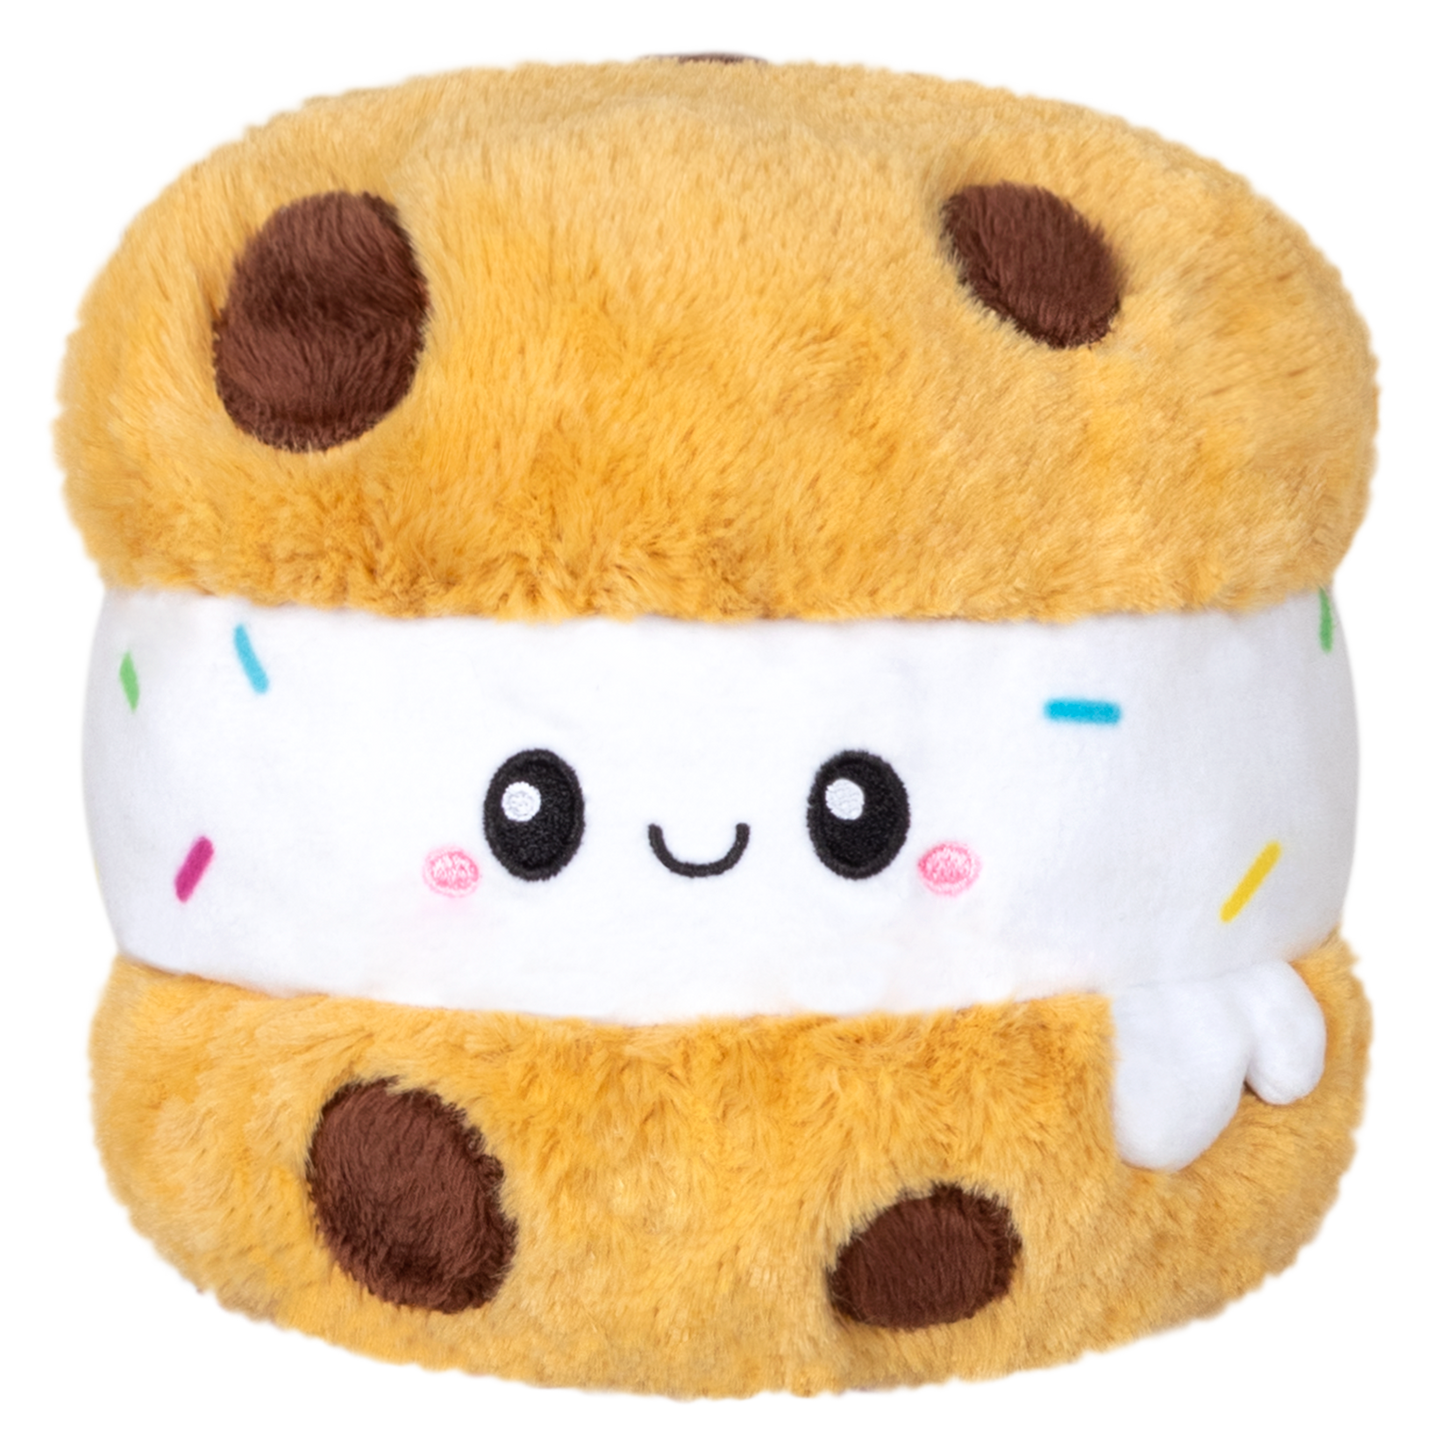 Snugglemi Snackers Cookie Ice Cream Sandwich